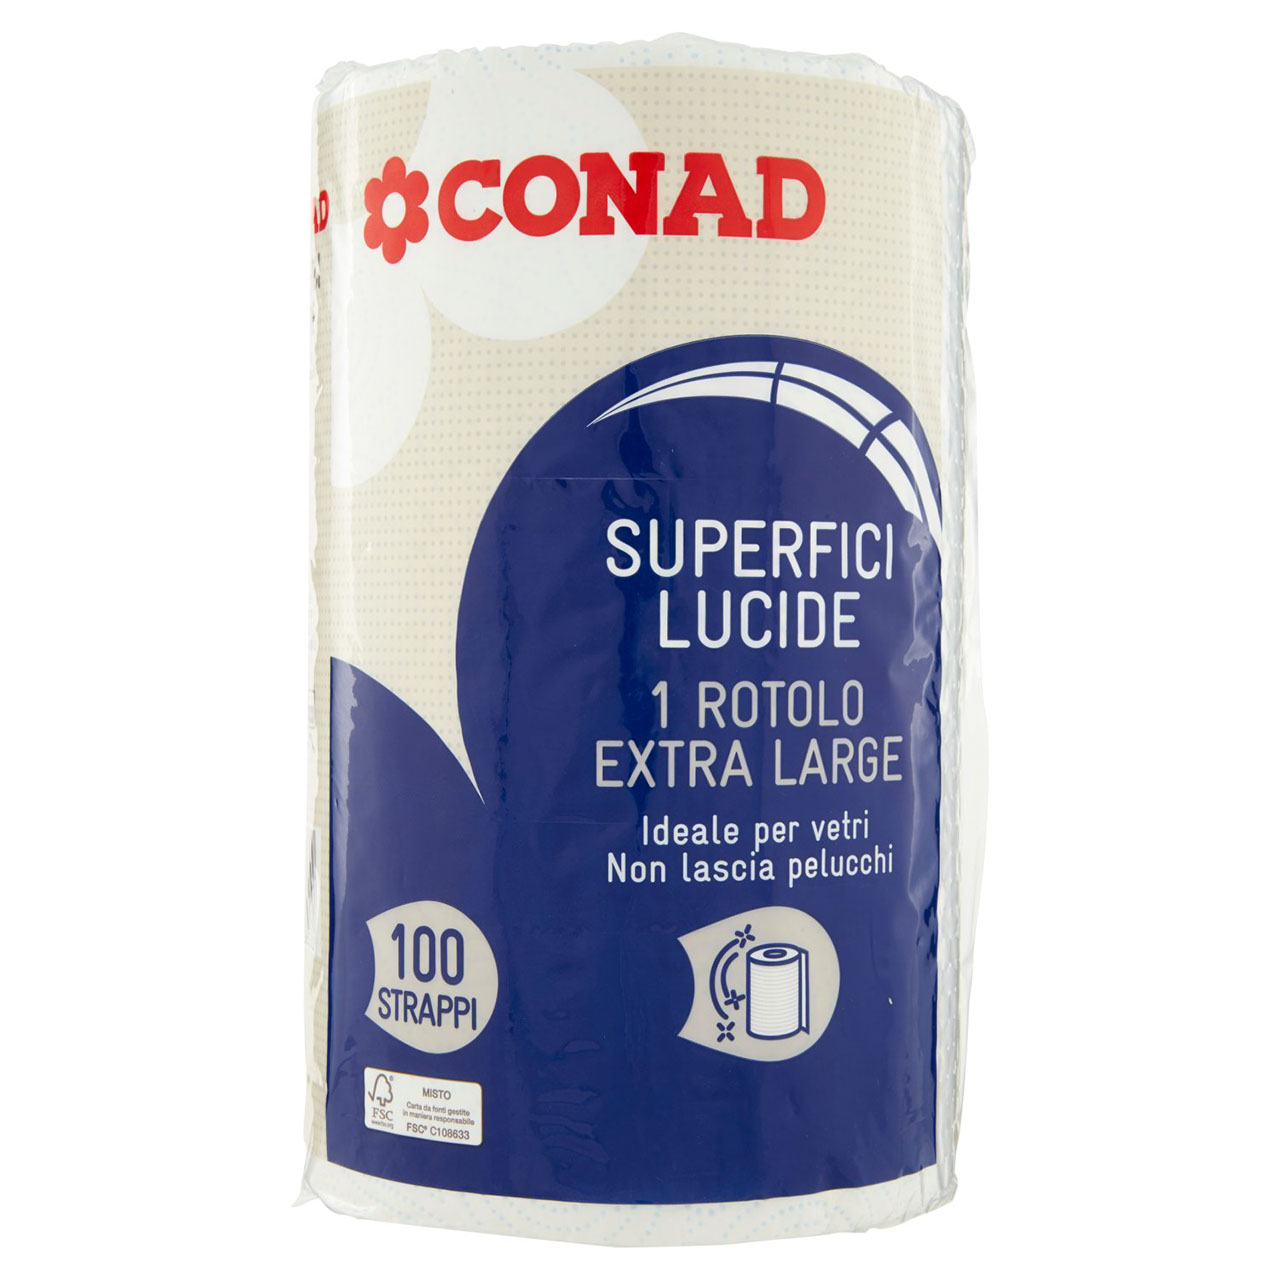 Superfici Lucide 1 Rotolo Extra Large Conad